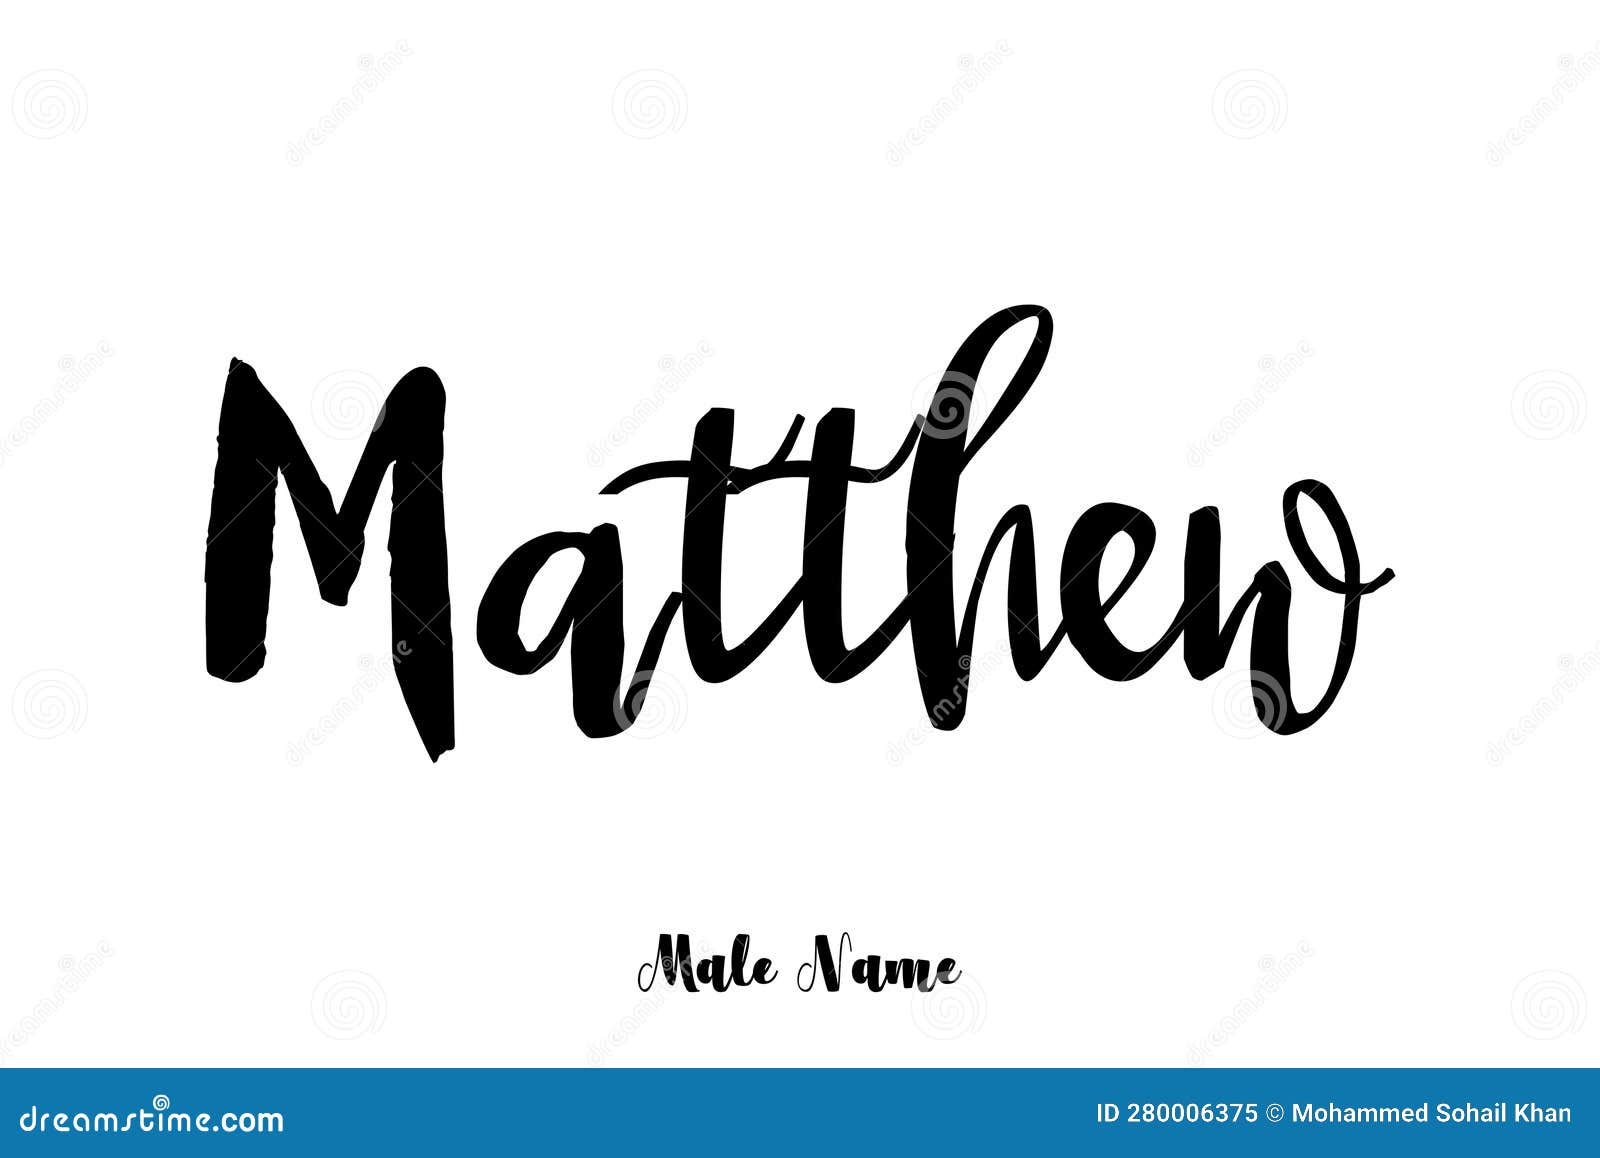 Matthew Name Tattoo Designs  Name tattoos Matthew name Names